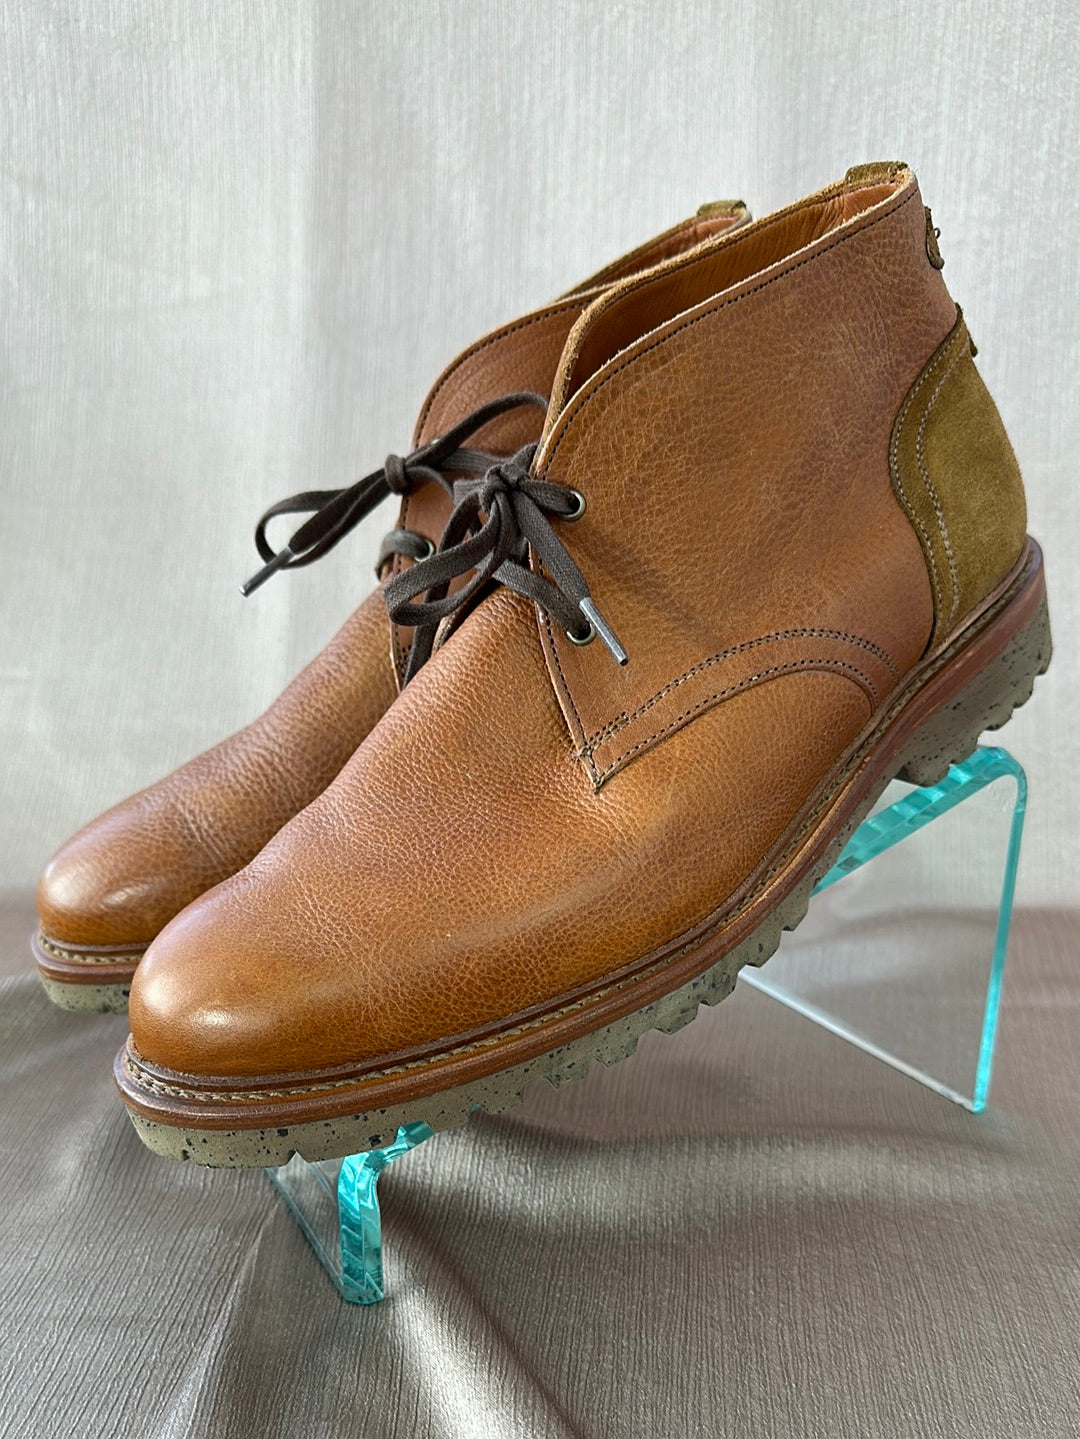 ALLEN EDMONDS cognac brown Discovery Chukka Boots - Men's 9.5